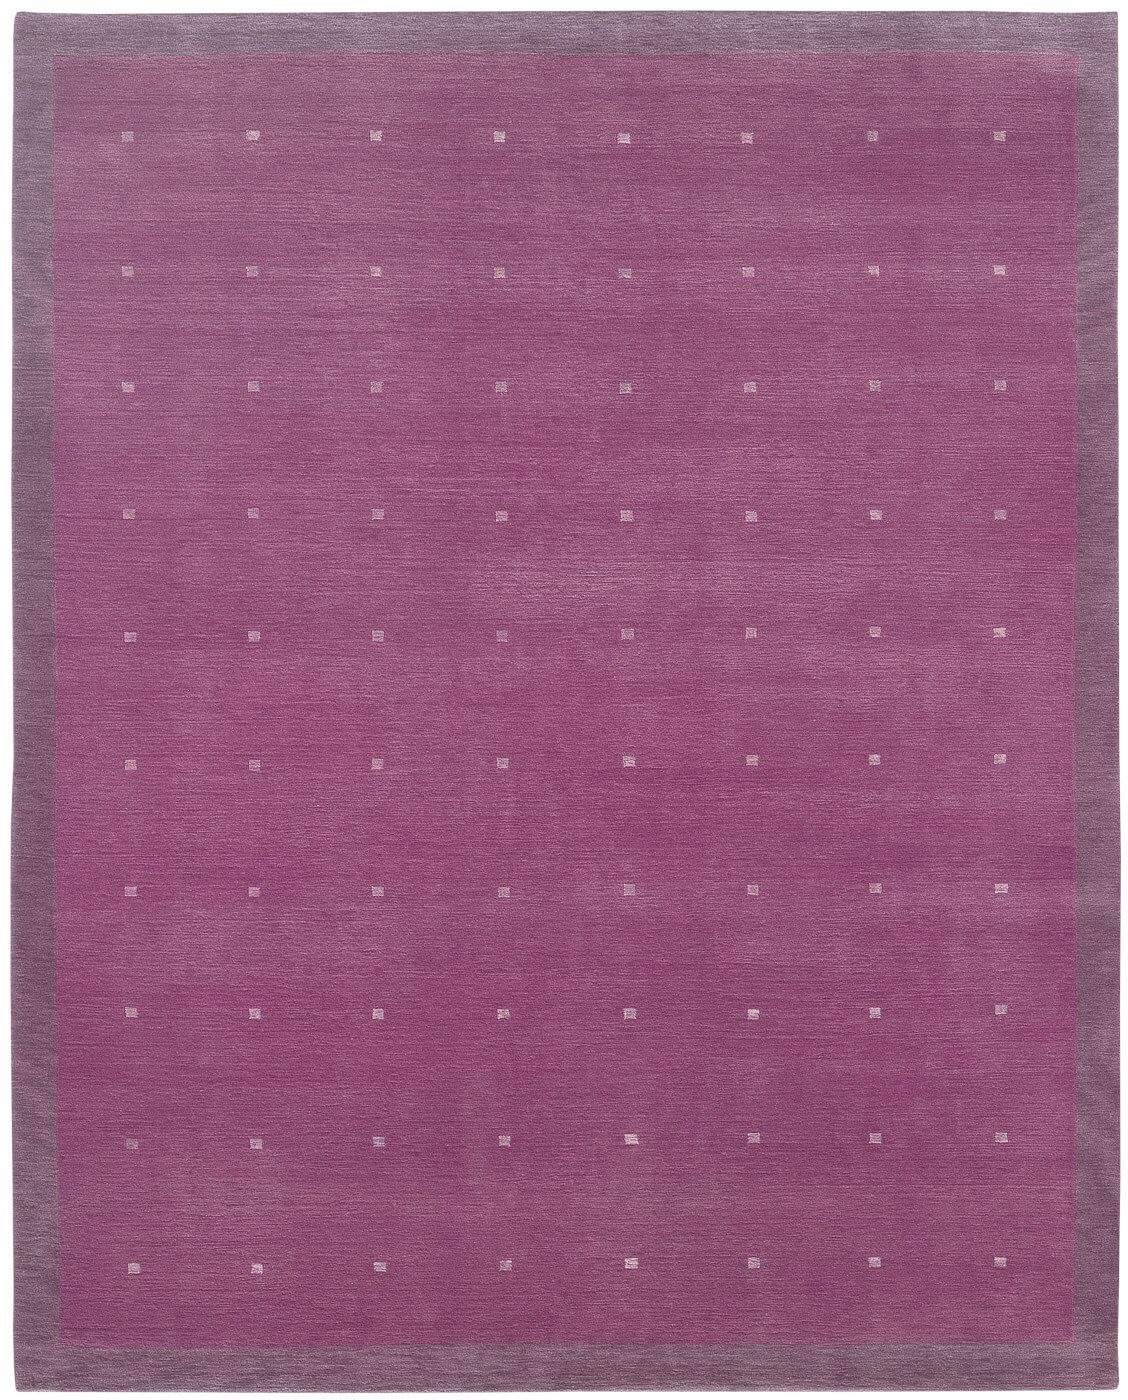 Элитный ковер Symbol Border пурпурный германского бренда Jan Kath